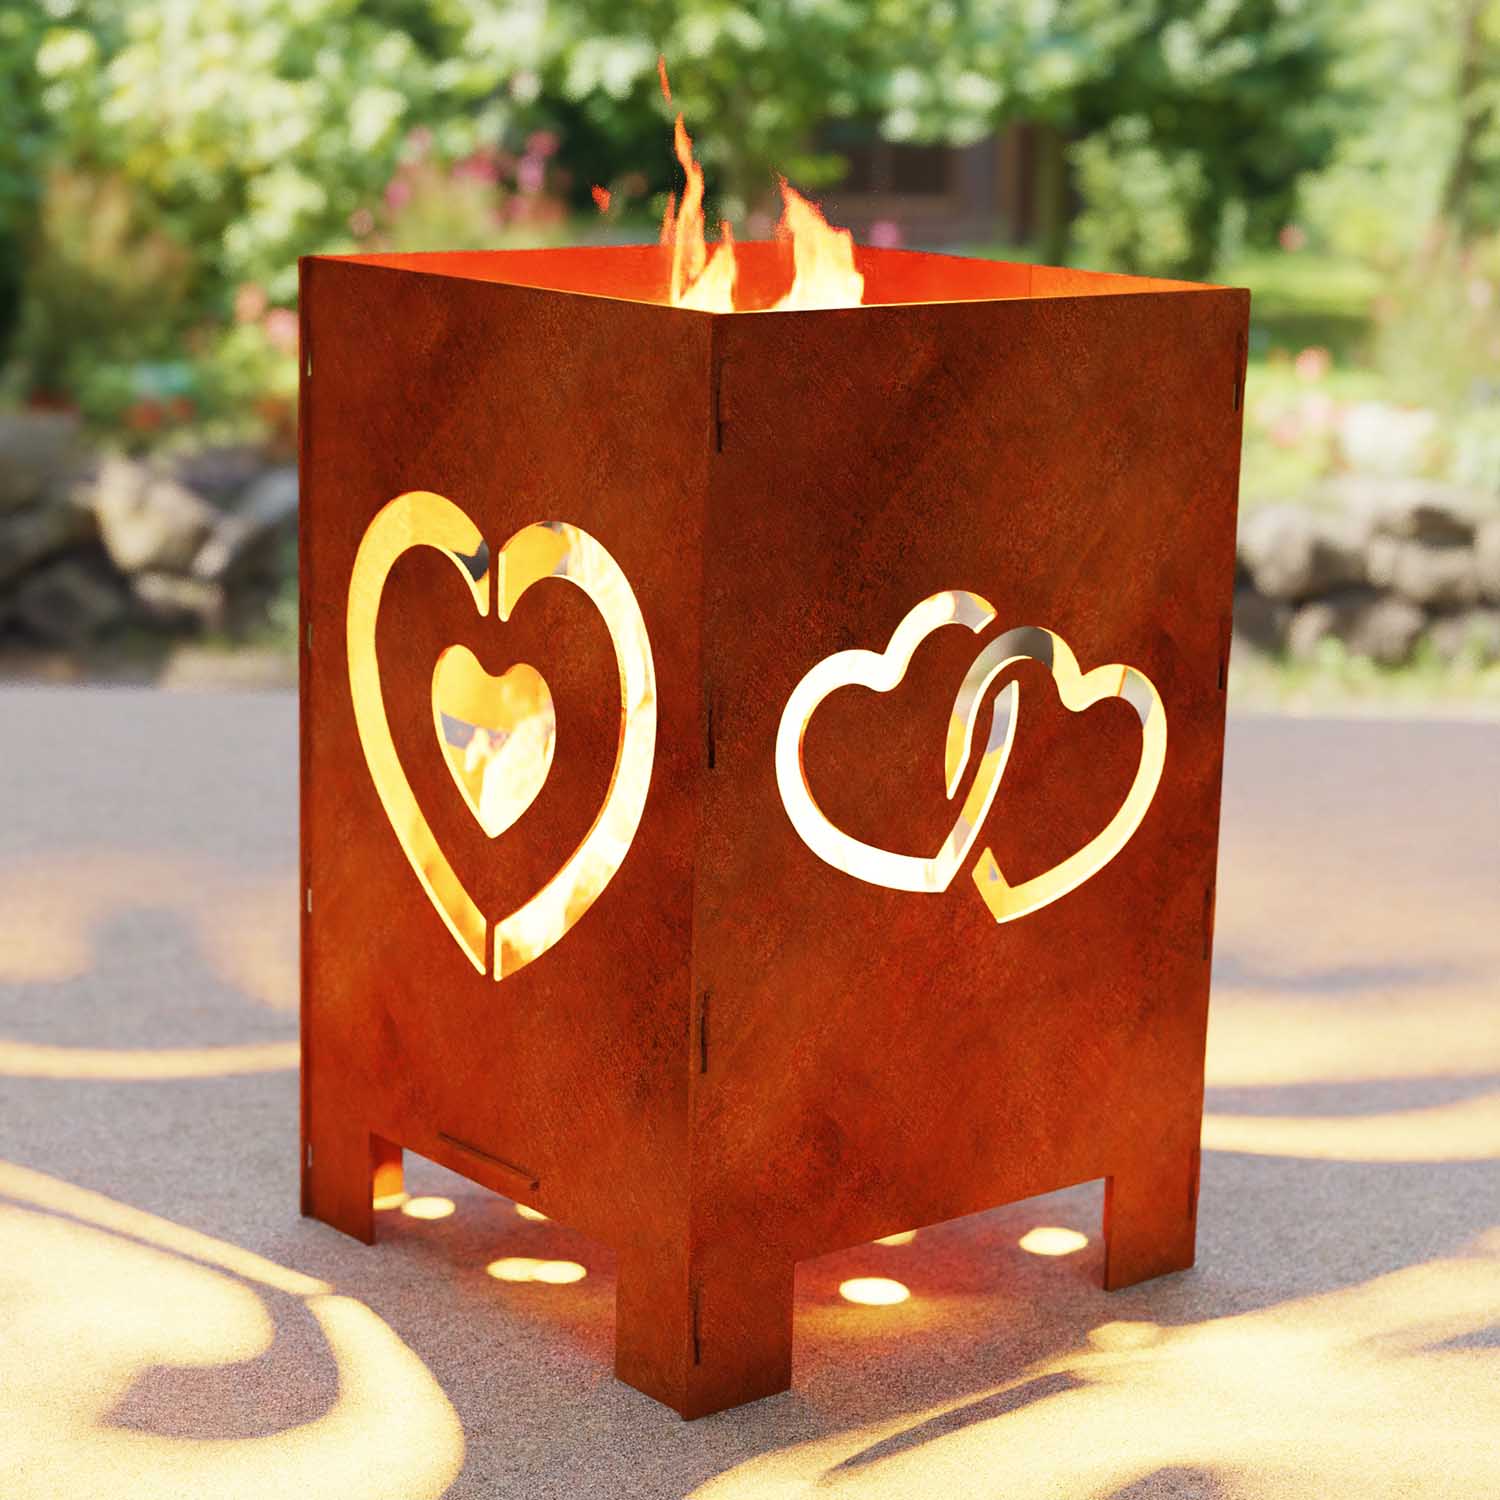 Feuerkorb aus Stahl, Motiv Herzen, 40 x 40 x 60 cm, Materialstärke 4 mm